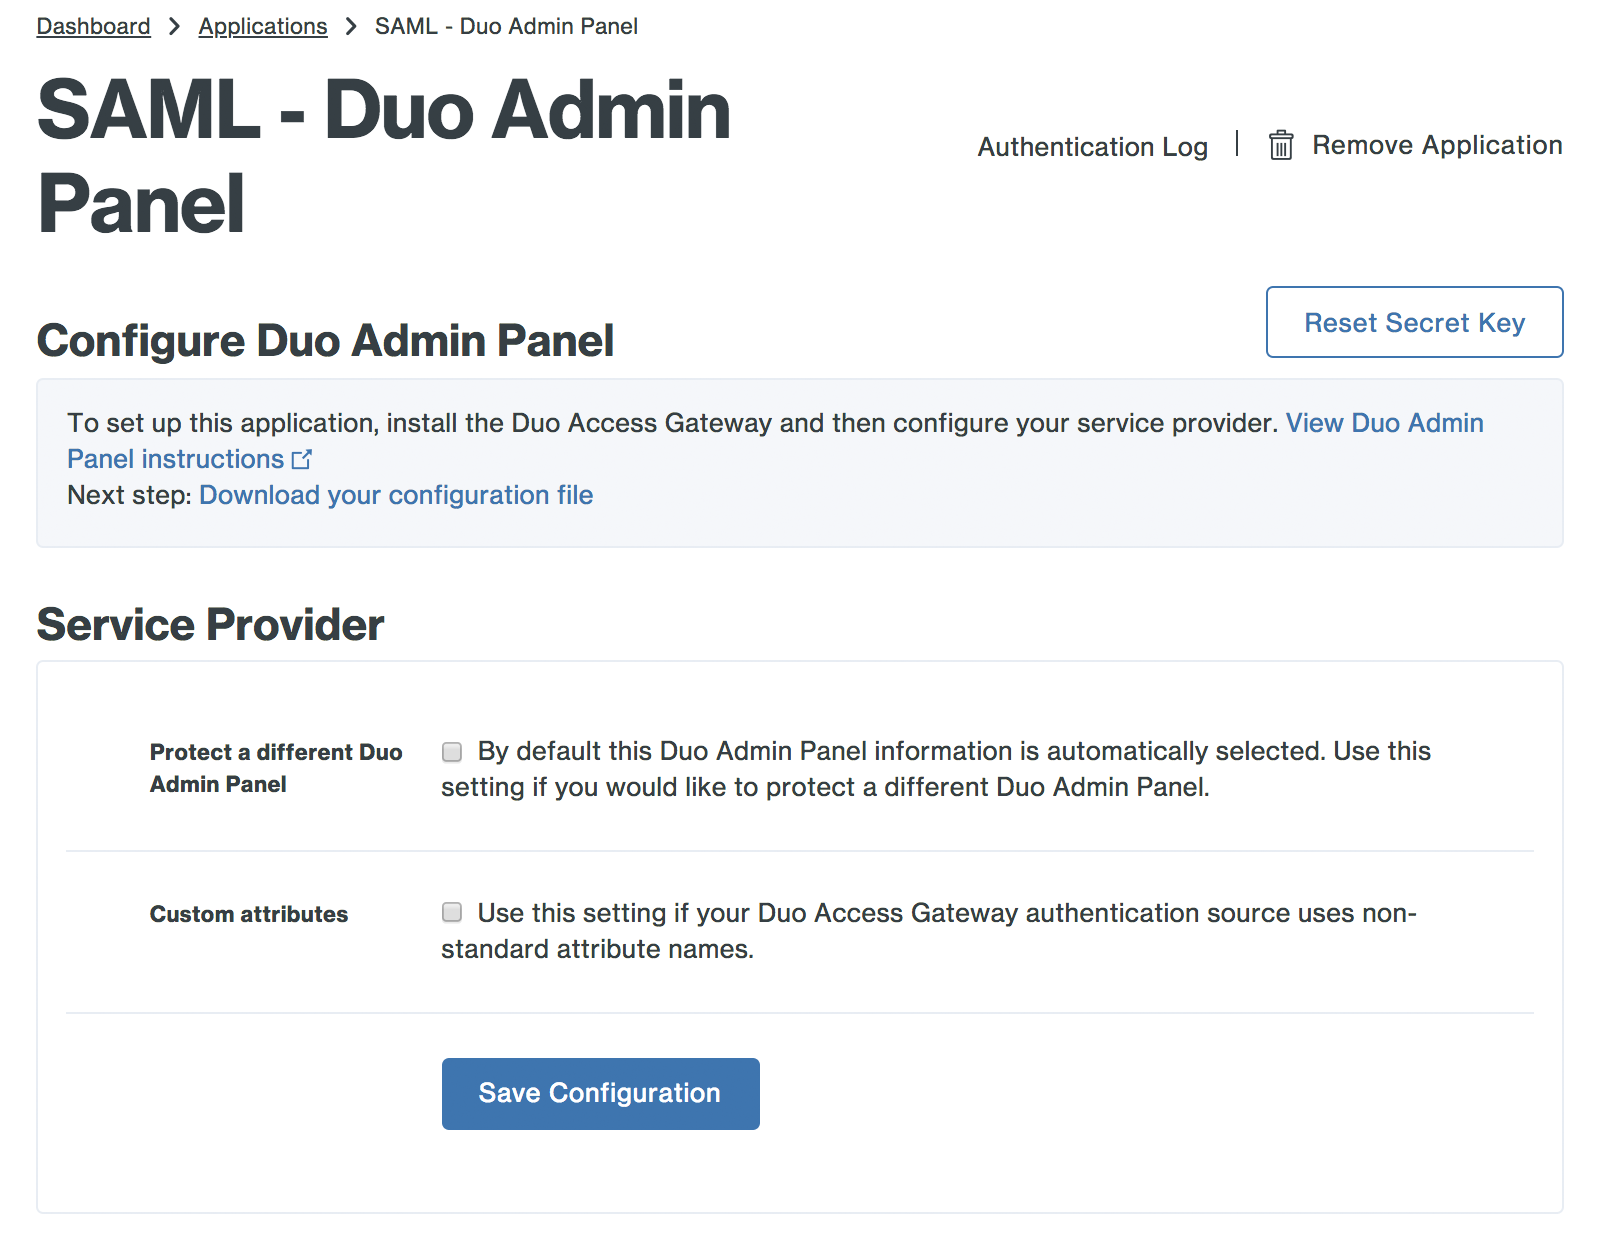 Duo Admin Panel SAML Application Settings